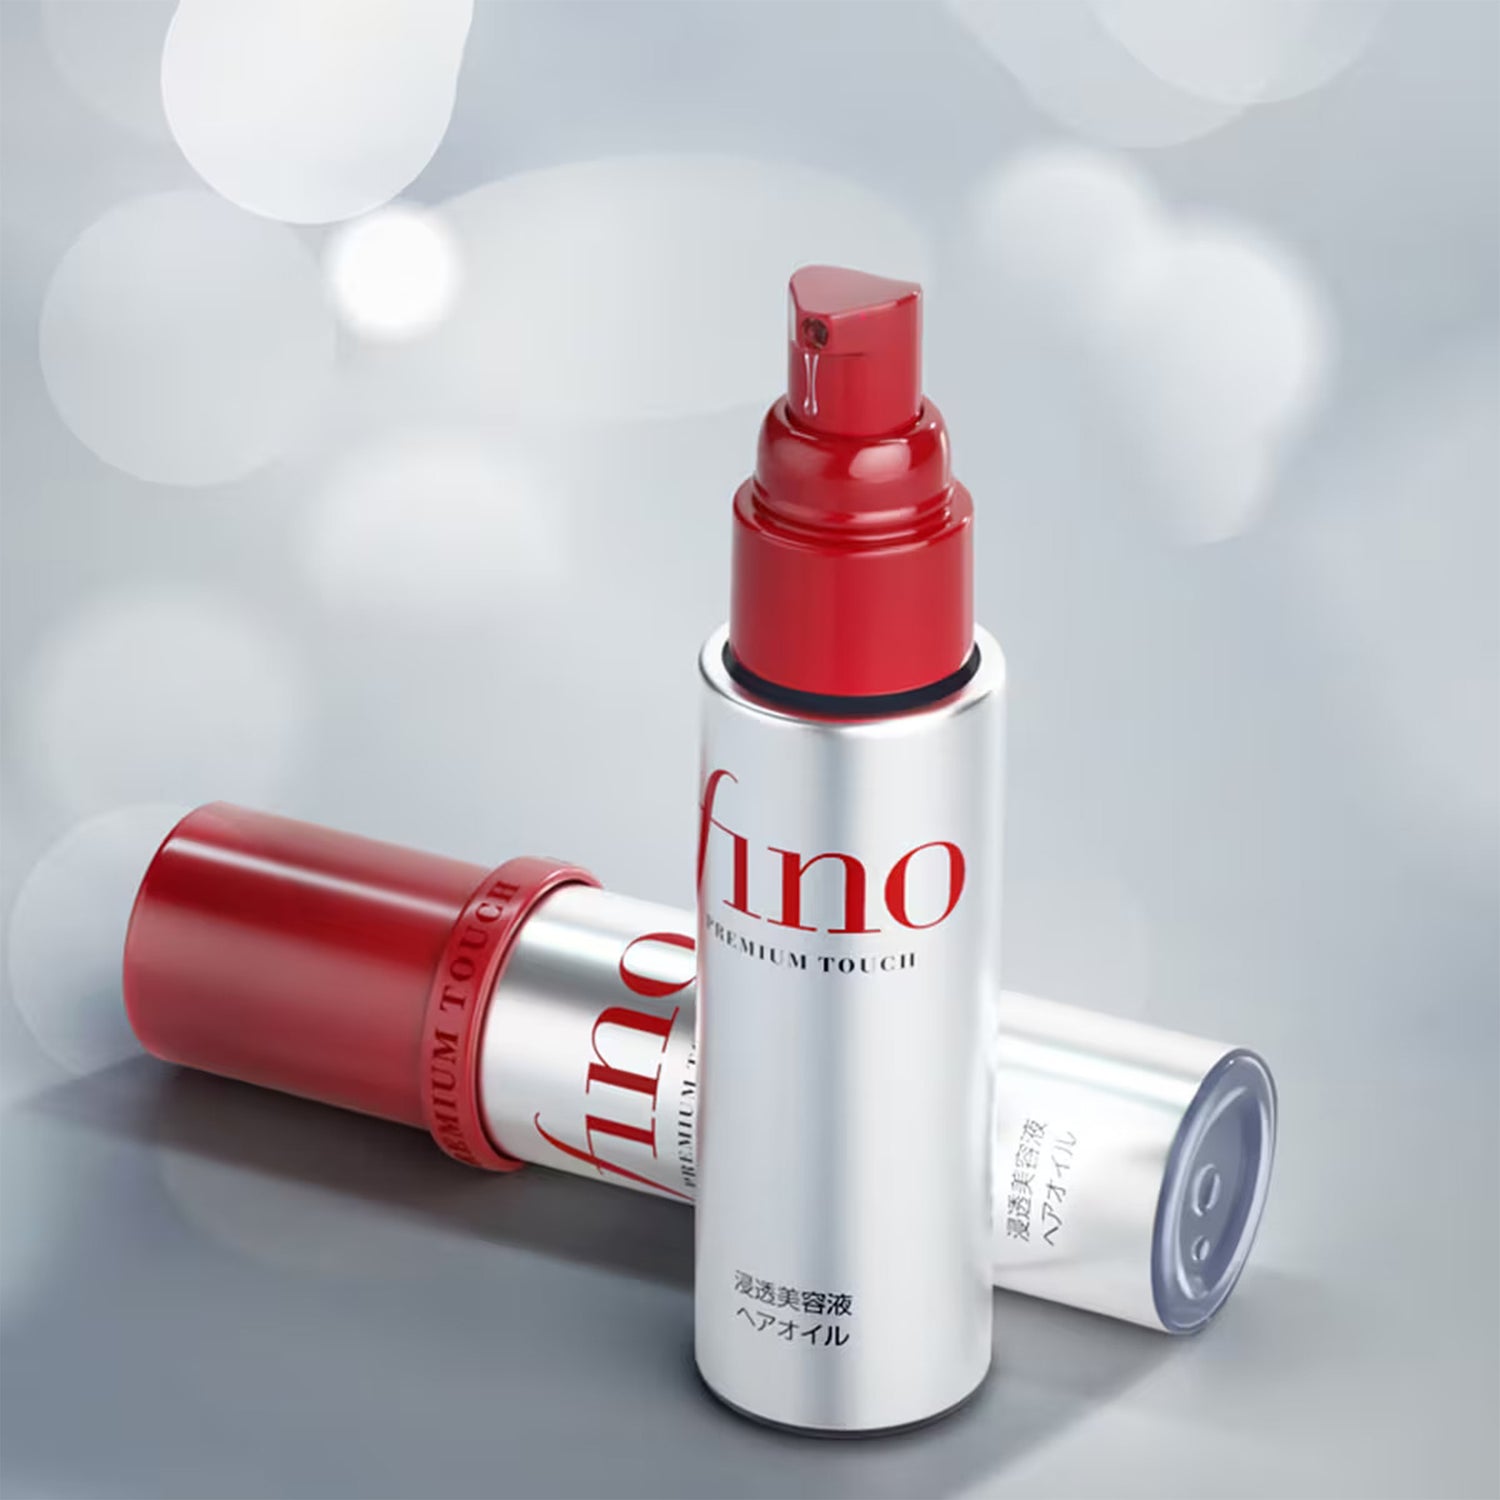 SHISEIDO Fino Premium Touch Hair Oil 70ml  LAMOUR Beauty & Life